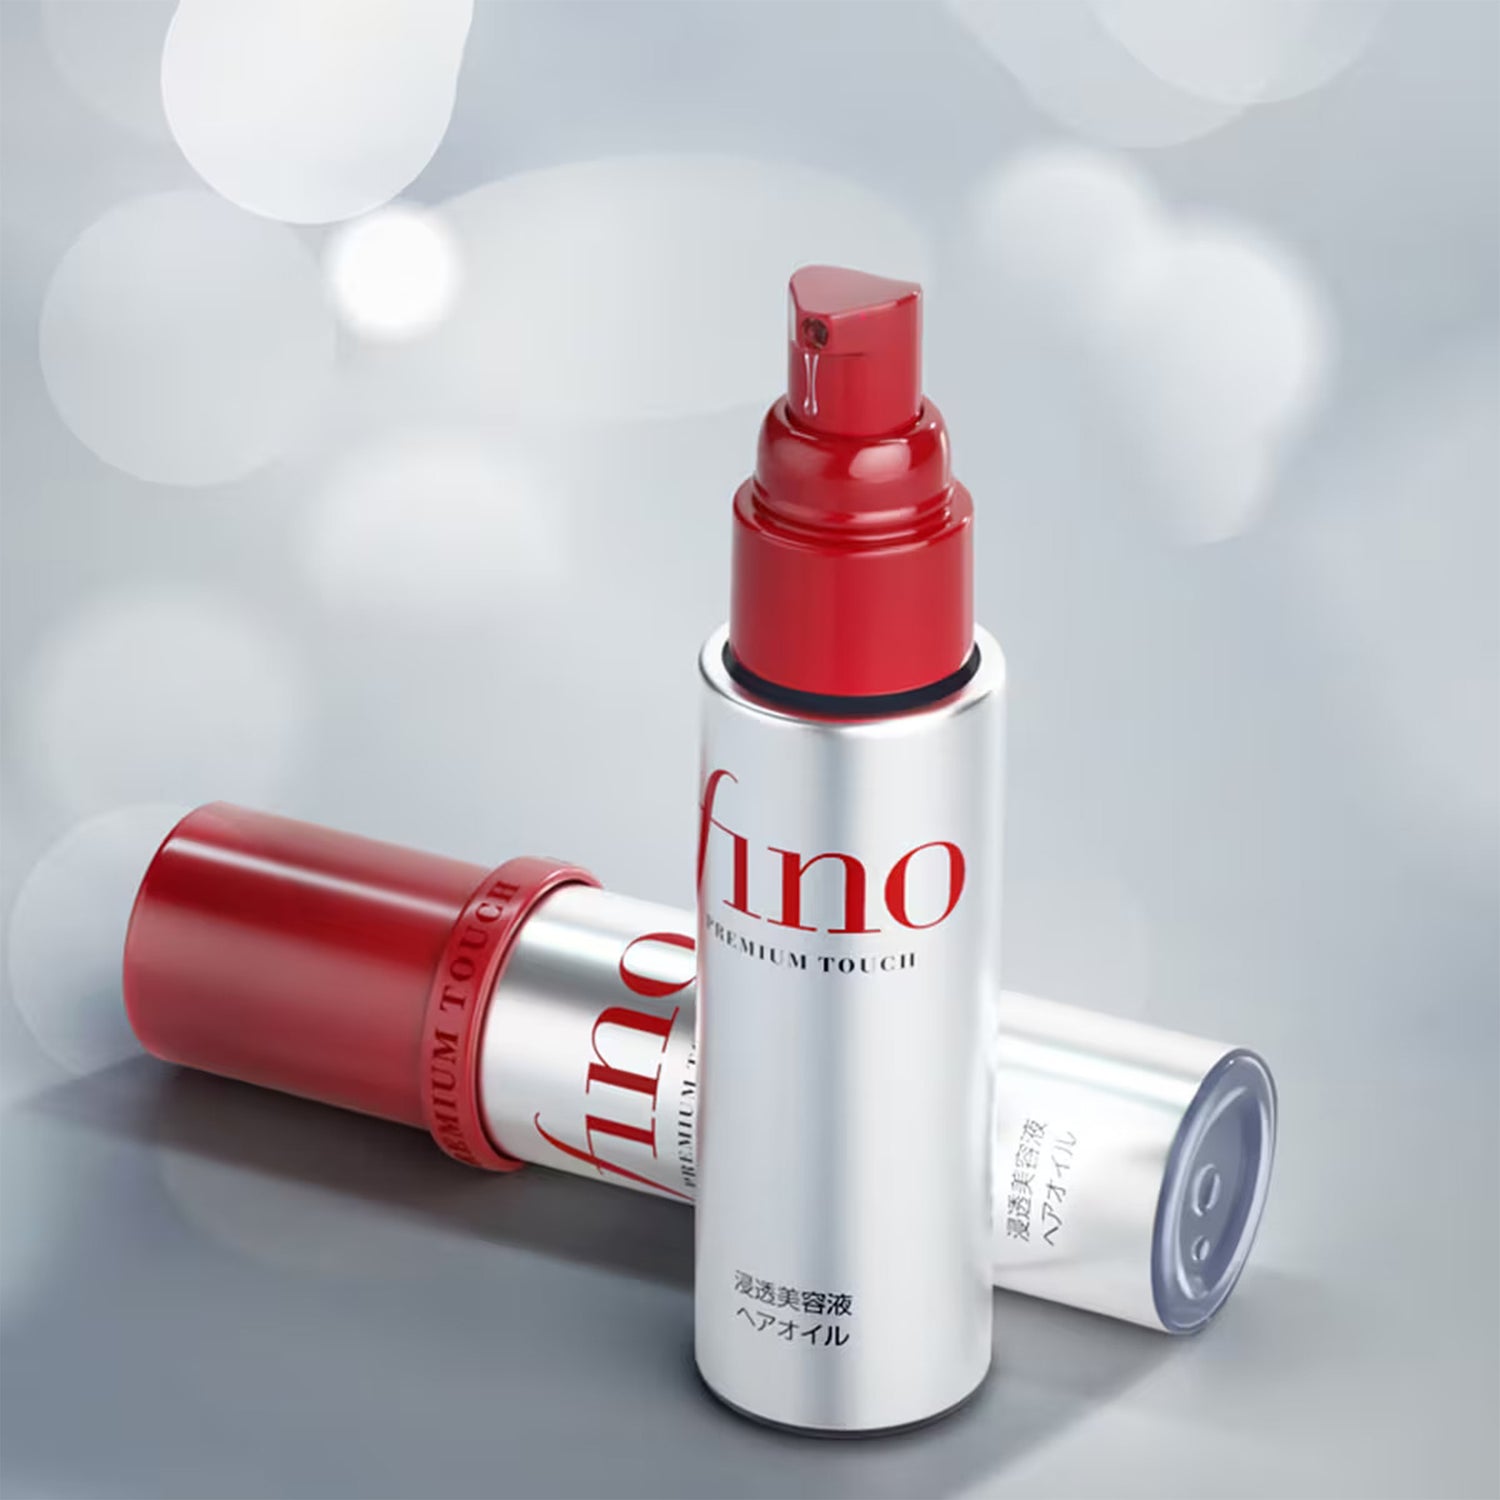 SHISEIDO Fino Premium Touch Hair Oil 70ml  LAMOUR Beauty & Life